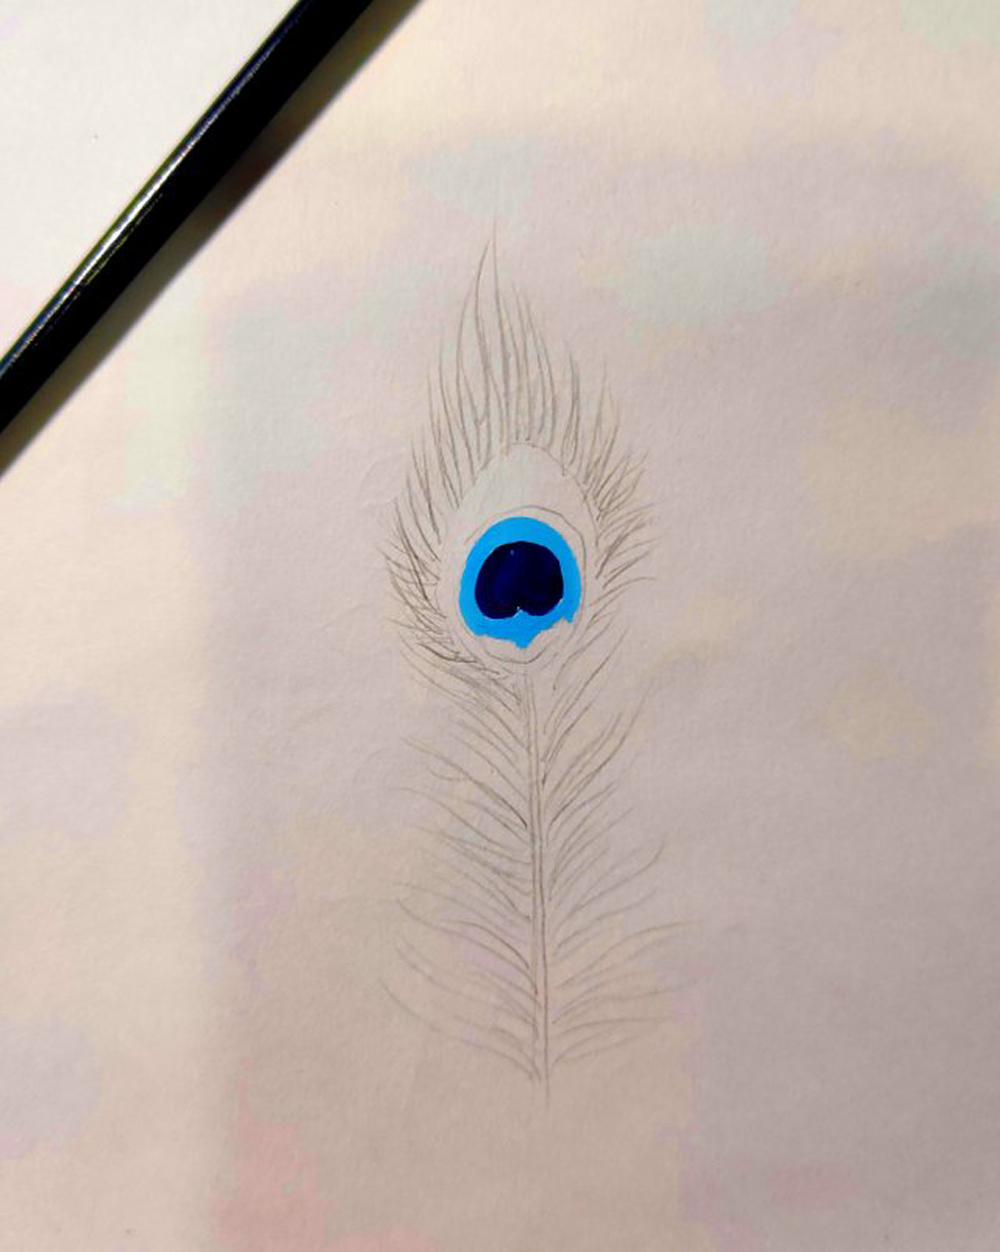 Stylized Peacock Feather by littlehos on DeviantArt